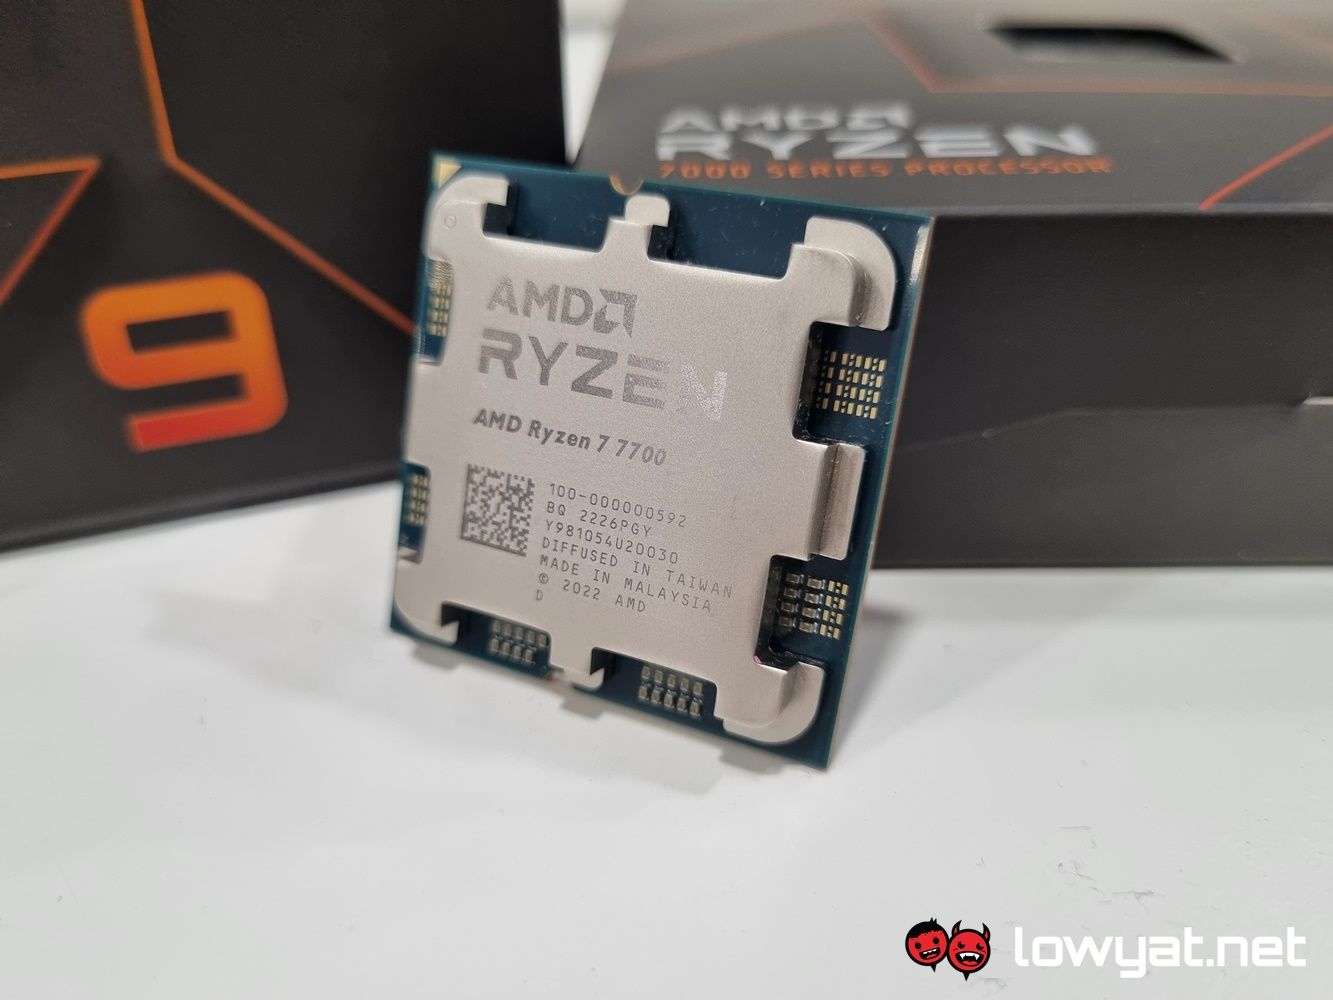 AMD Ryzen 9 7900, Ryzen 7 7700, and Ryzen 5 7600 announced